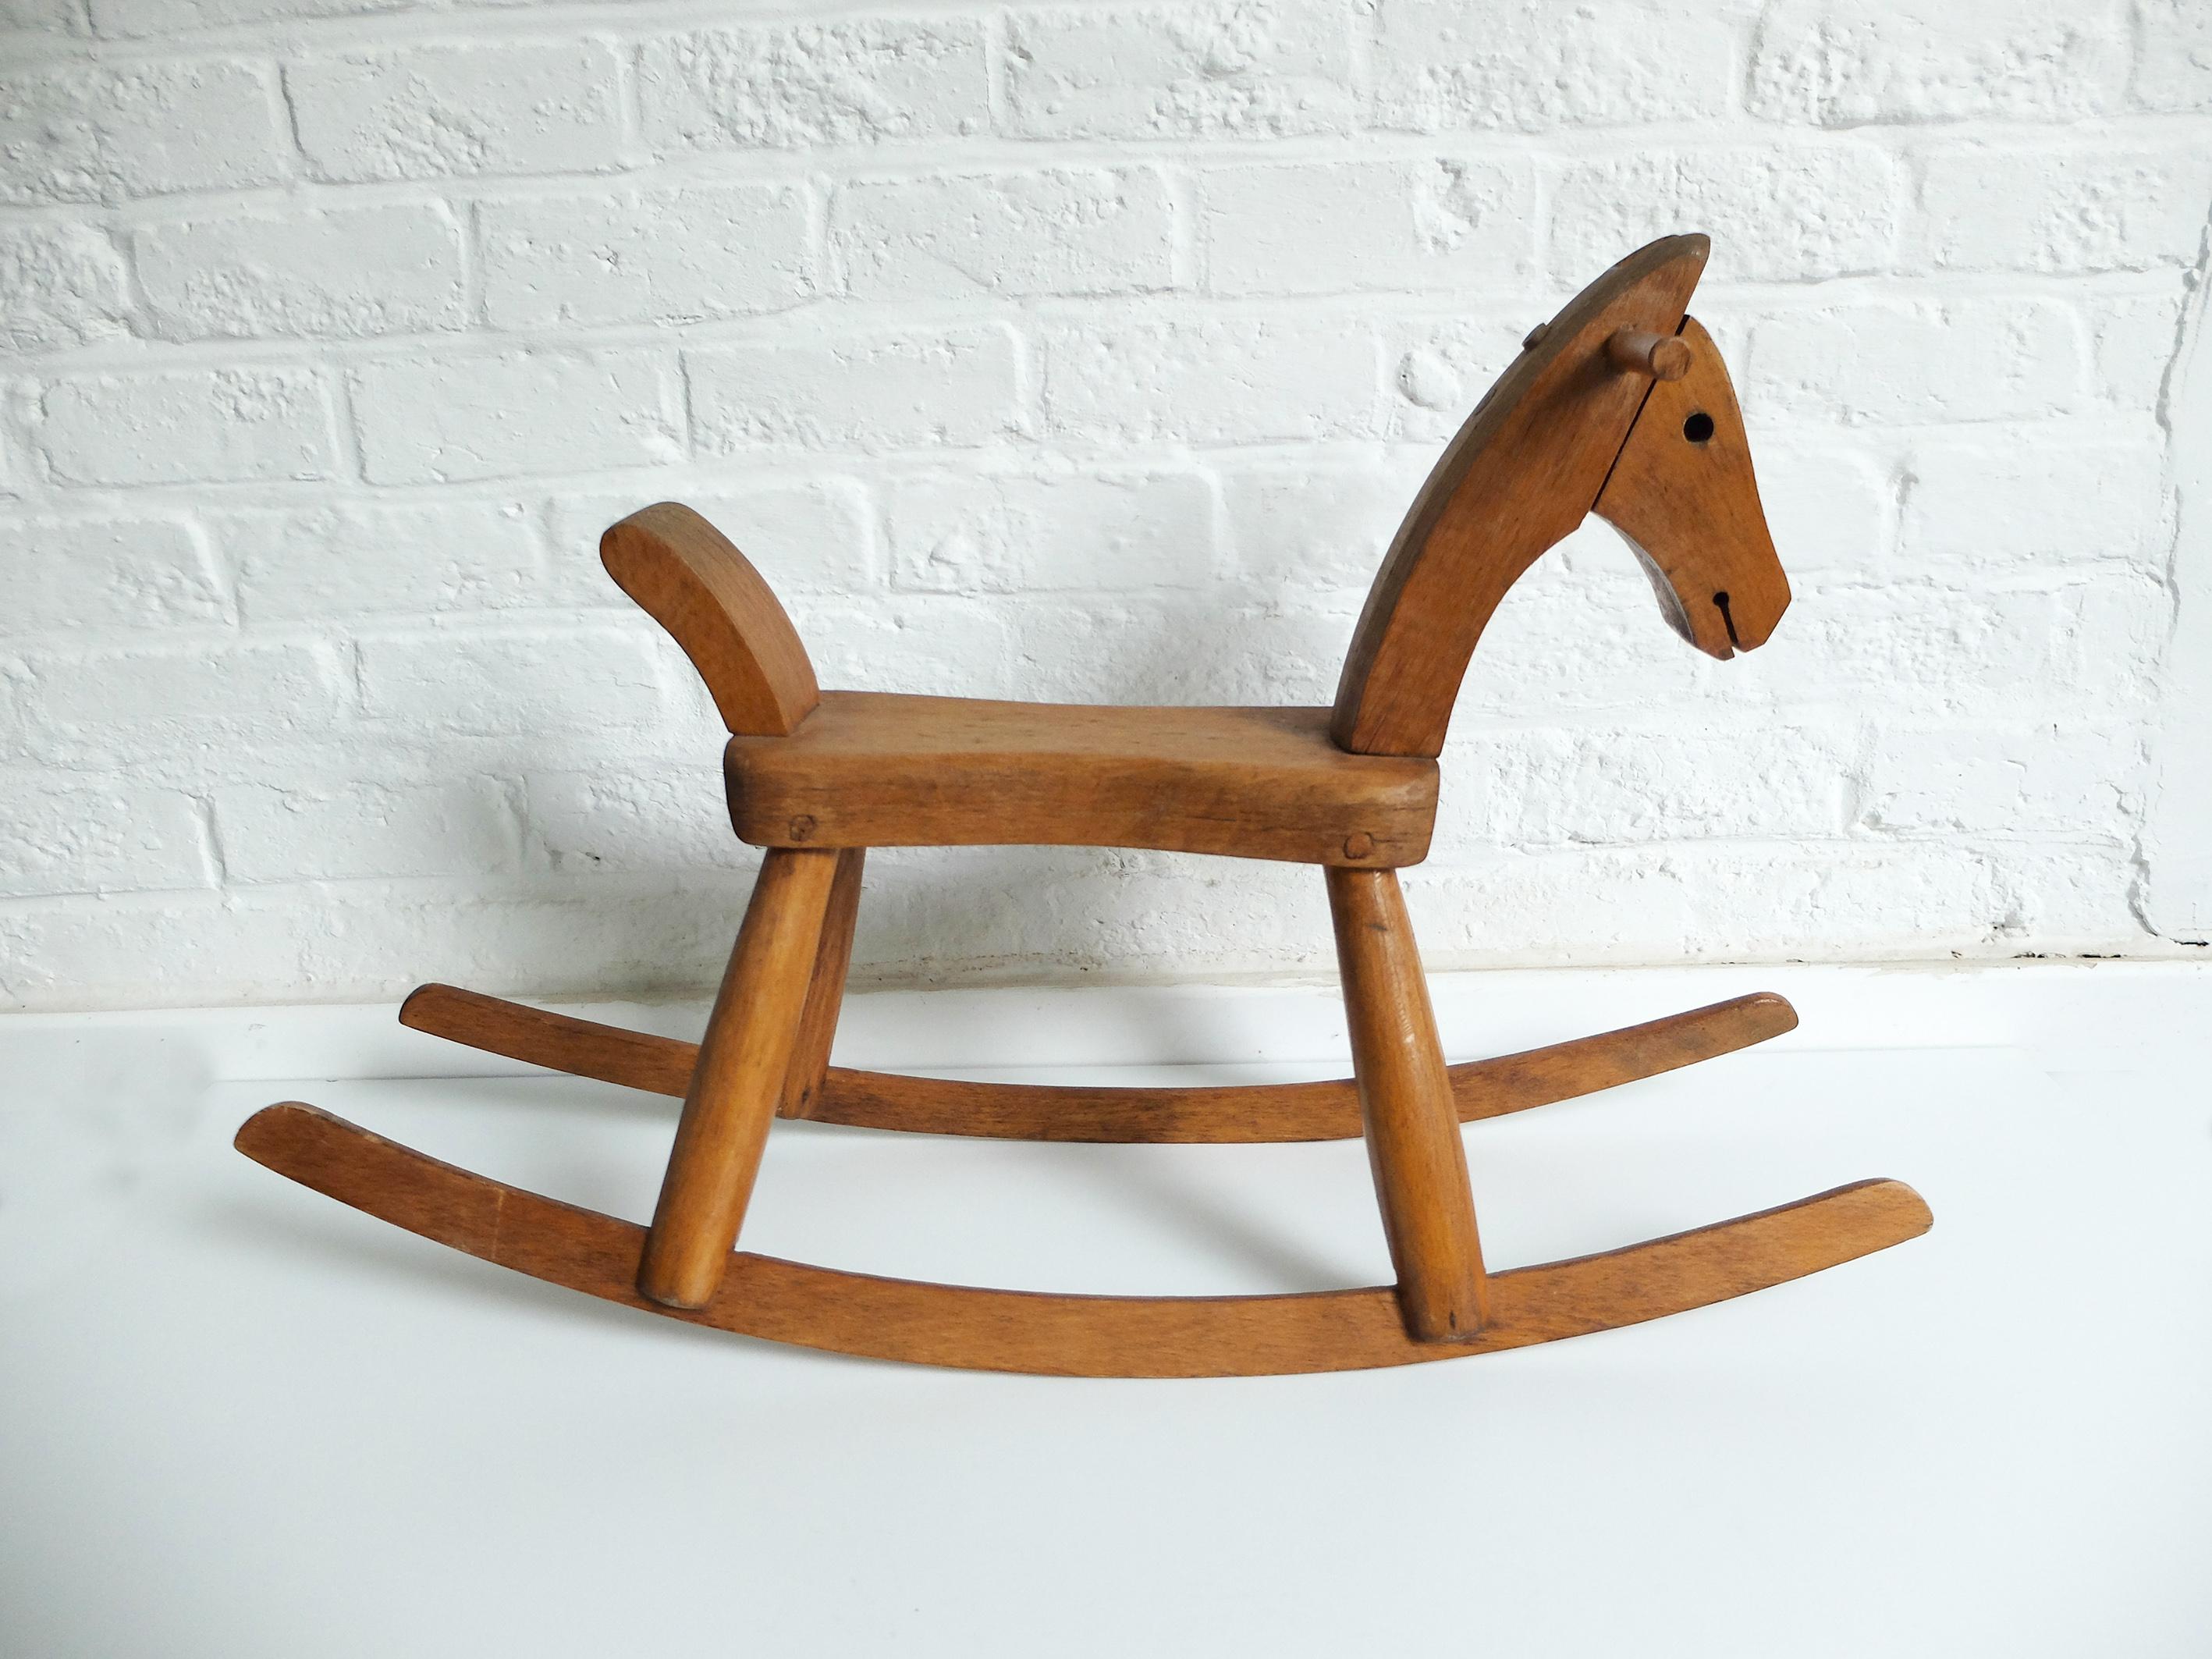 Scandinavian Modern Scandinavian Vintage Rocking Horse in wood by Kay Bojesen, Denmark, 1950s